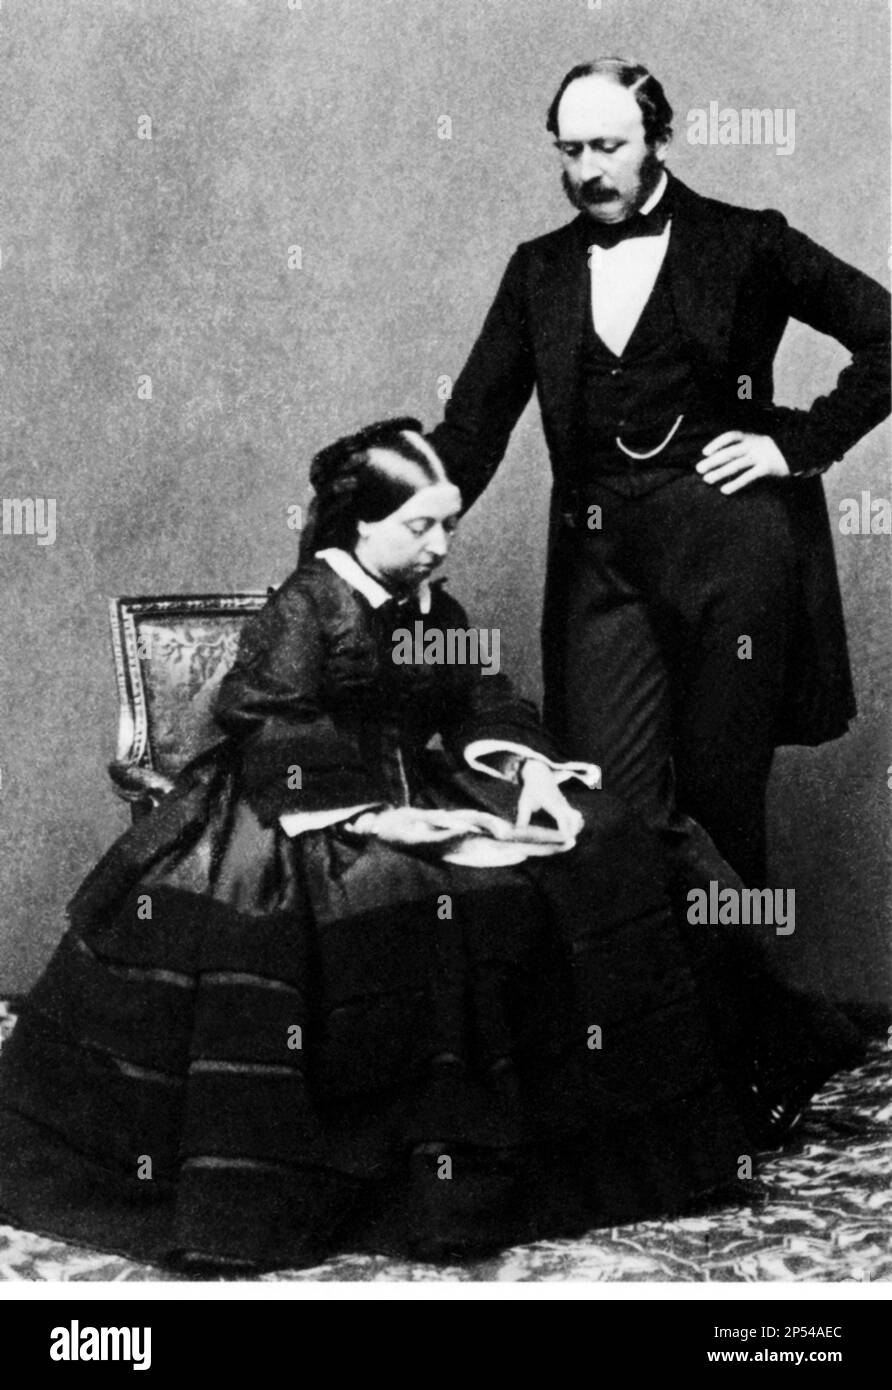 Ca. 1858 : Prinz Consort ALBERT von SACHSEN COBURG GOTHA SAALFELD ( 1819 - 1861 ) mit Ehefrau Königin Victoria Hannover von England ( 1819 - 1901 ) - REALI - NOBILI - ADEL - ADEL - INGHILTERRA - GRAND BRETAGNA - REGNO UNITO - principe consorte - Portrait - Rituto - Baffi - Schnurrbart - favoriti - Cravatta papillon - Krawatte - catena dell'orologio - Uhrchaine - WINDSOR - VITTORIA e REGINA - Mogmarito - - Coniugi --- Archivio GBB Stockfoto